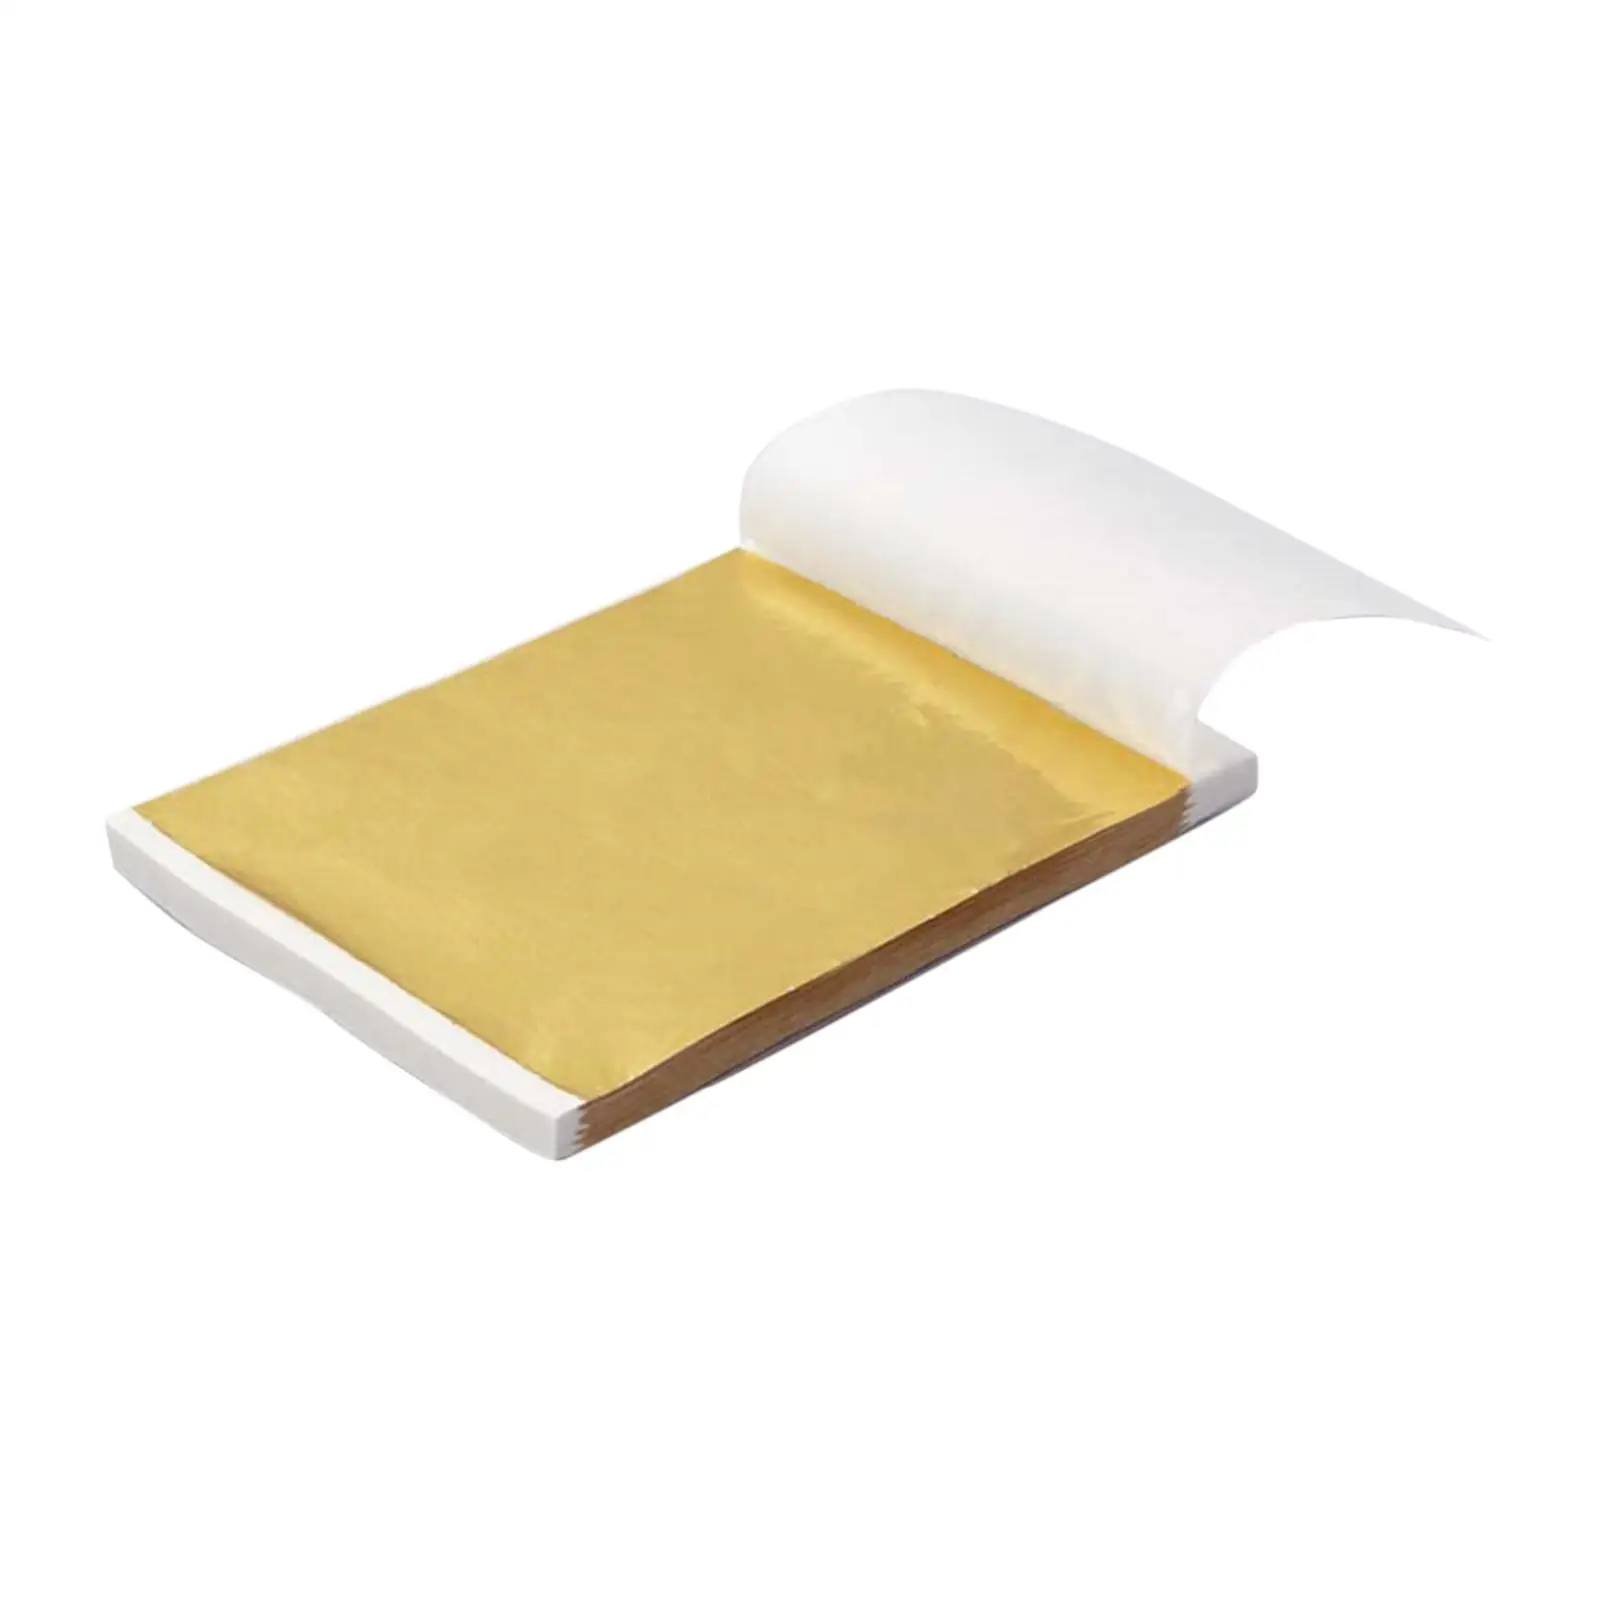 100x Gold Sheets Golden Aluminium Foil Candy Wrappers Foil Paper for Art Craft Work Makeup SPA Gift Basket Decoration